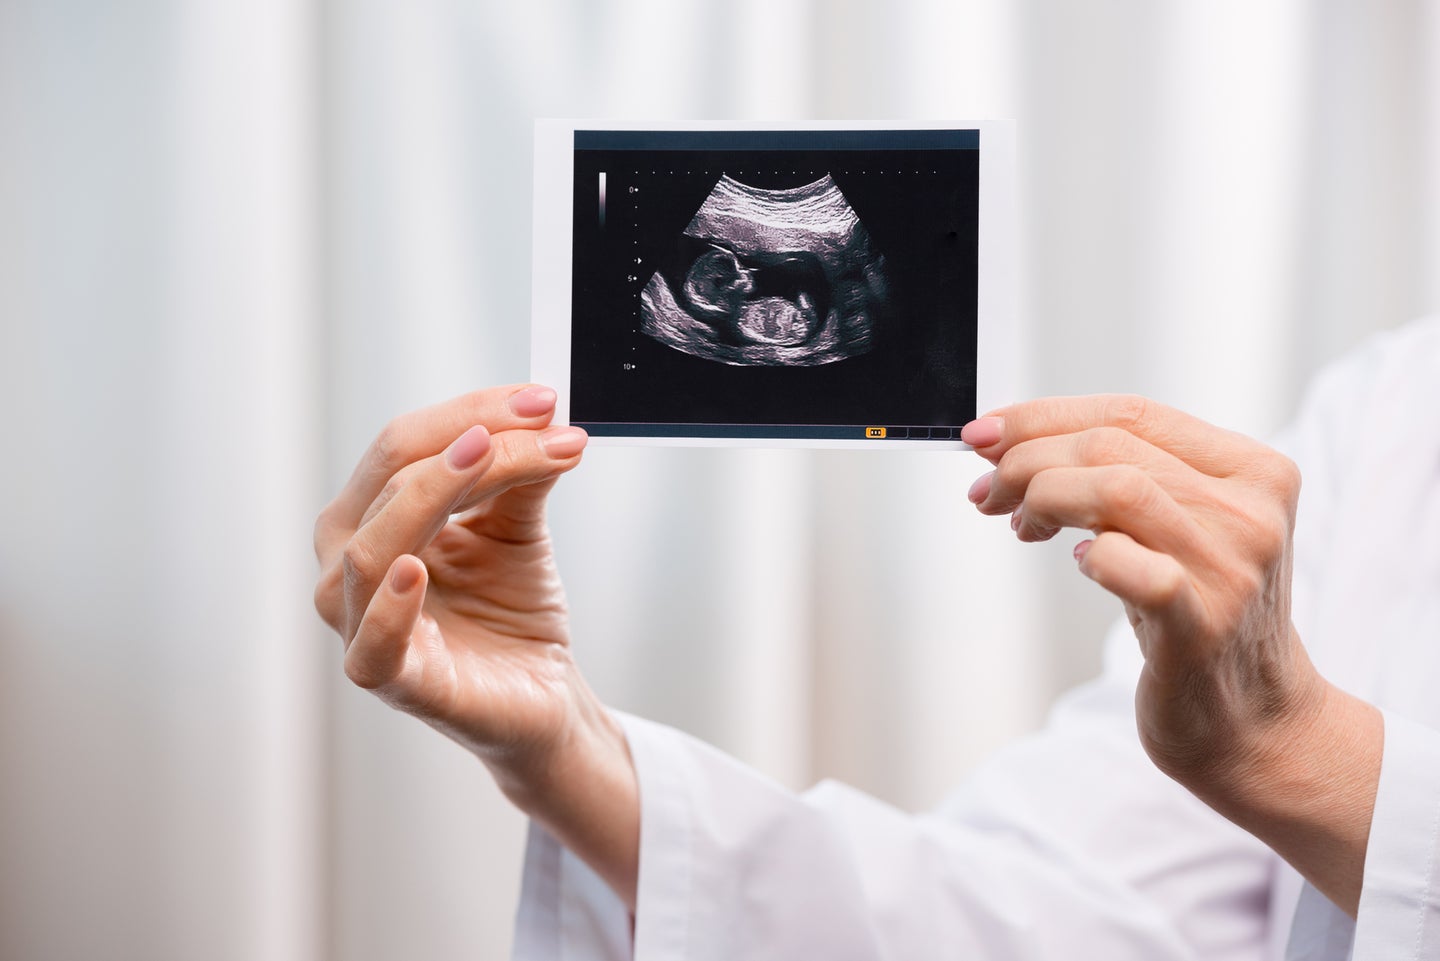 A doctor holding up a uterine ultrasound